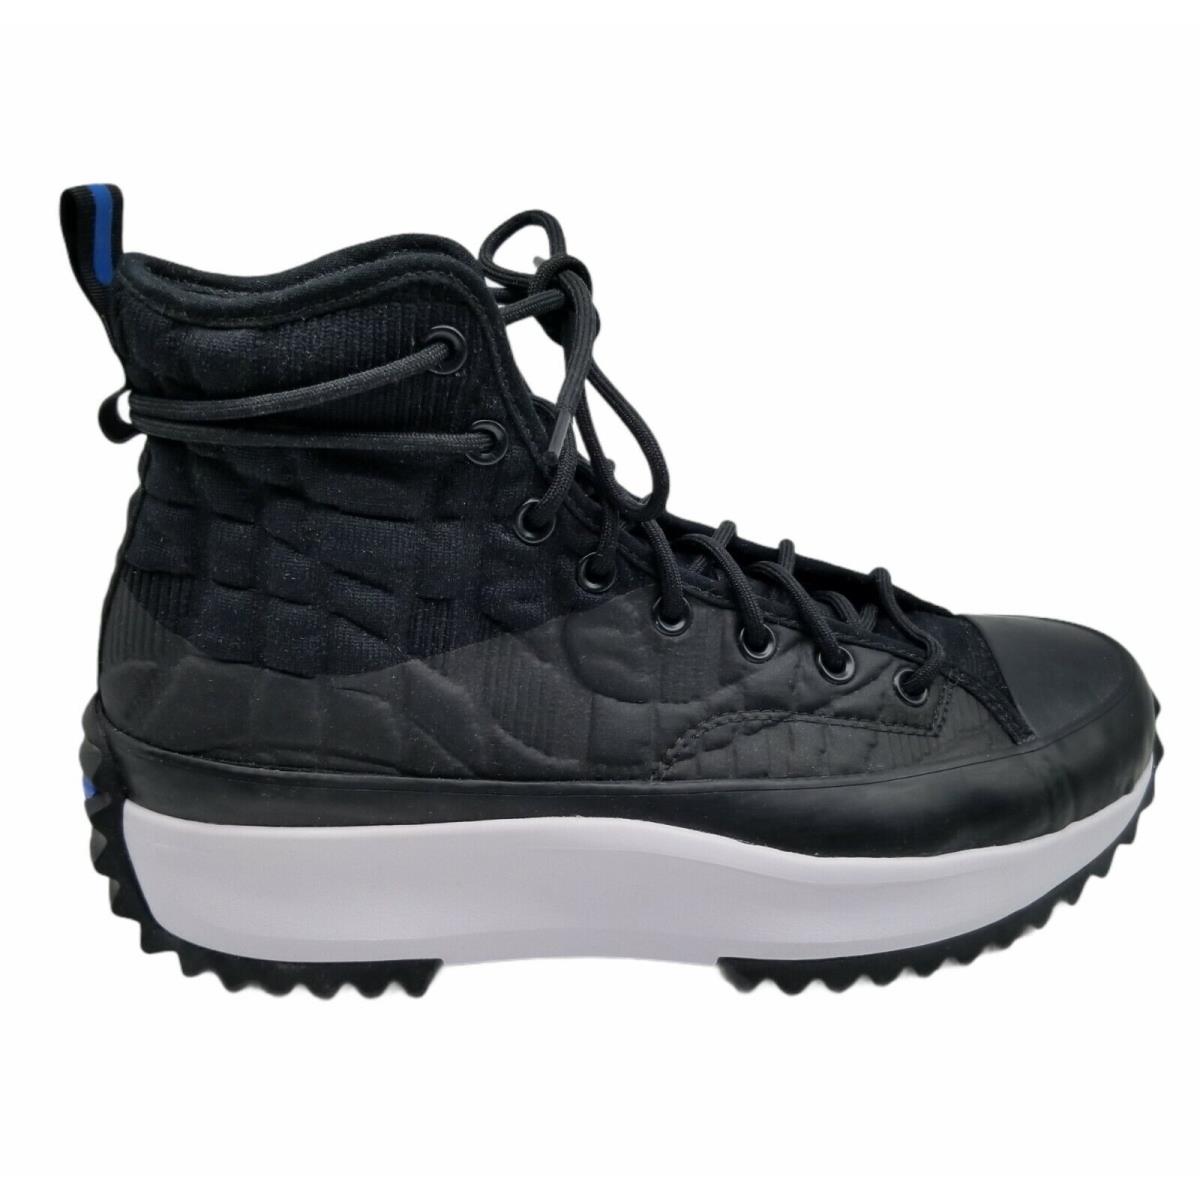 Converse Unisex Run Star Hike Hi 170246C Black White Sneaker Shoes Sz M10 W11.5